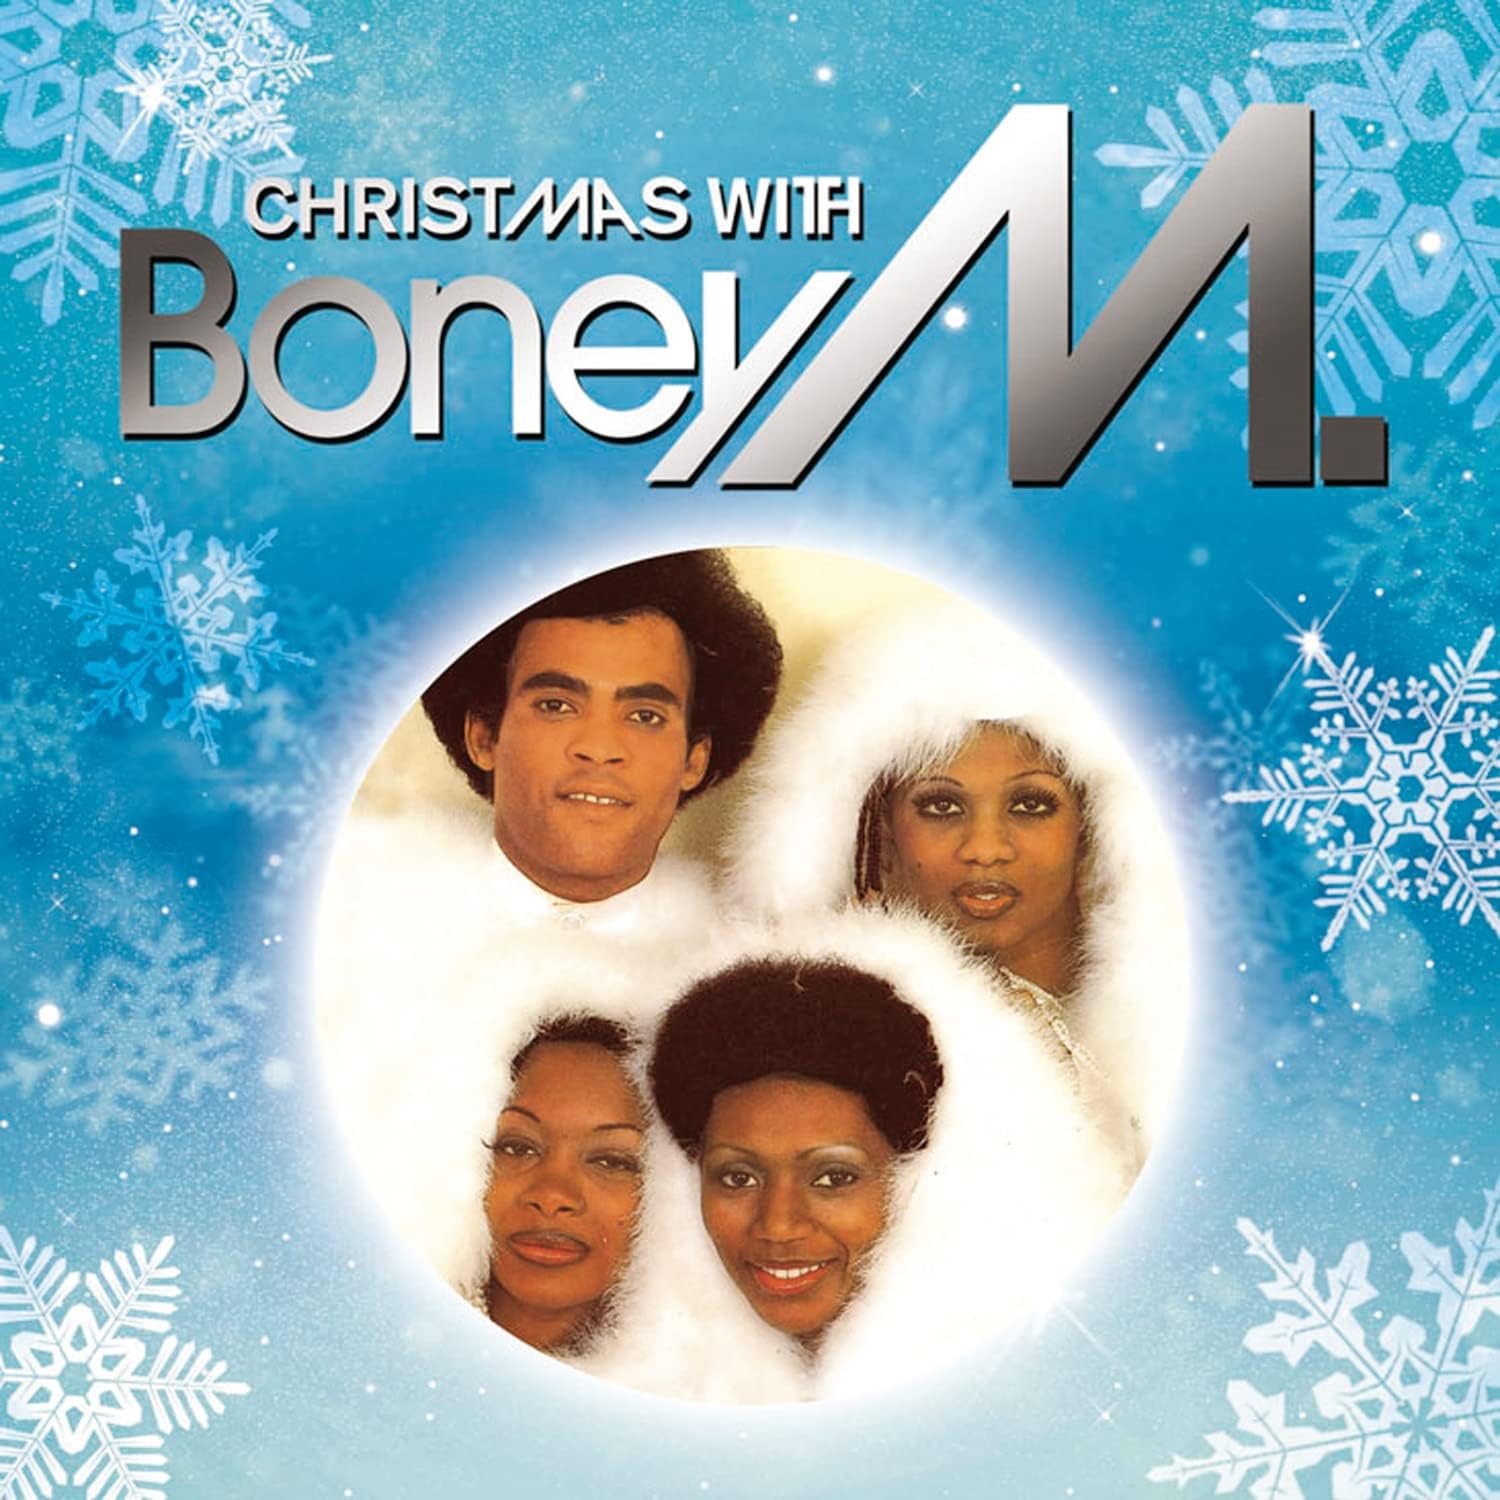 Christmas With Boney M. (2007, CD)